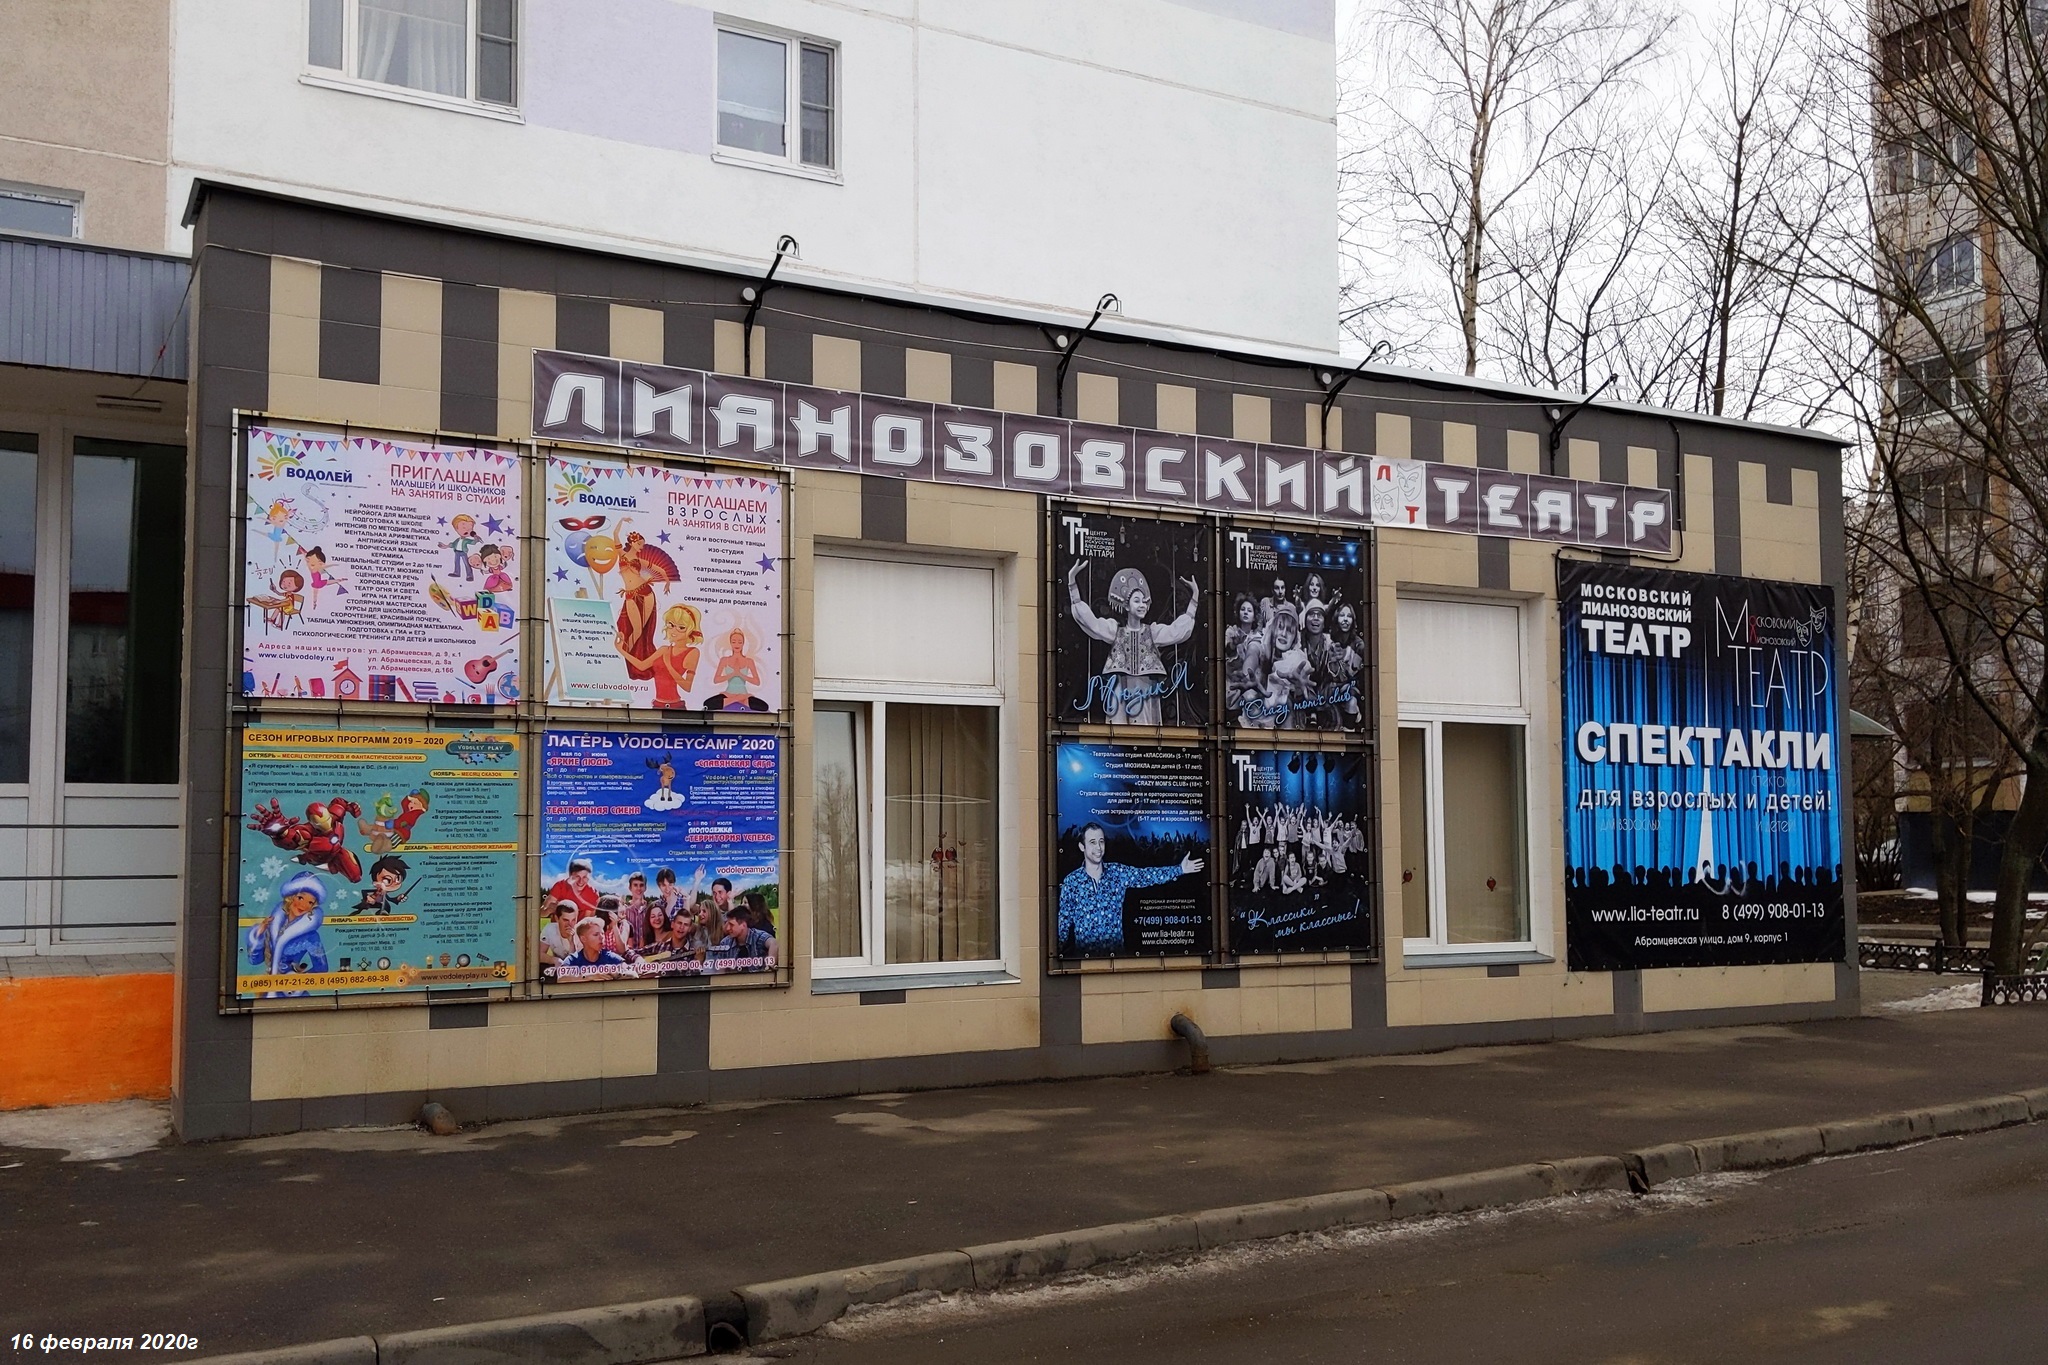 Лианозовский театр